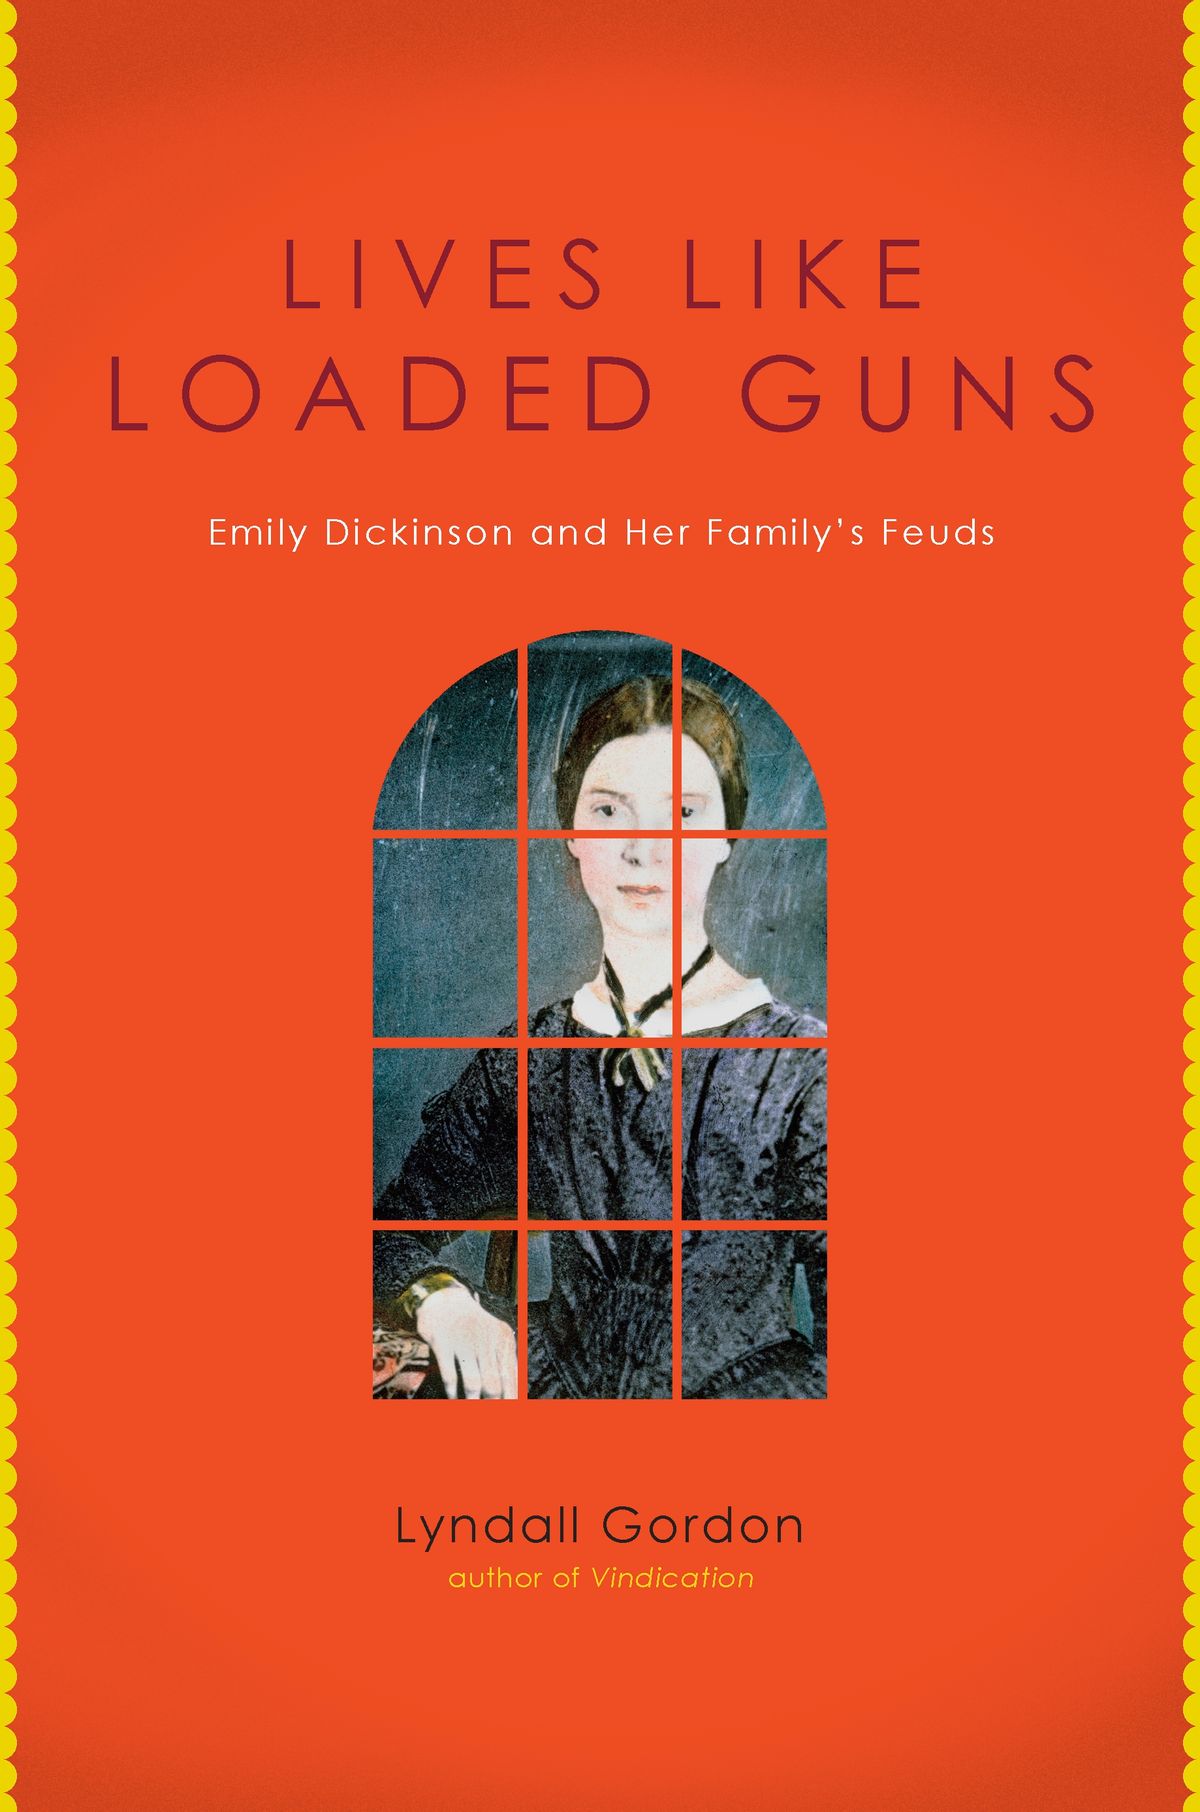 "Lives Like Loaded Guns," by Lyndall Gordon    